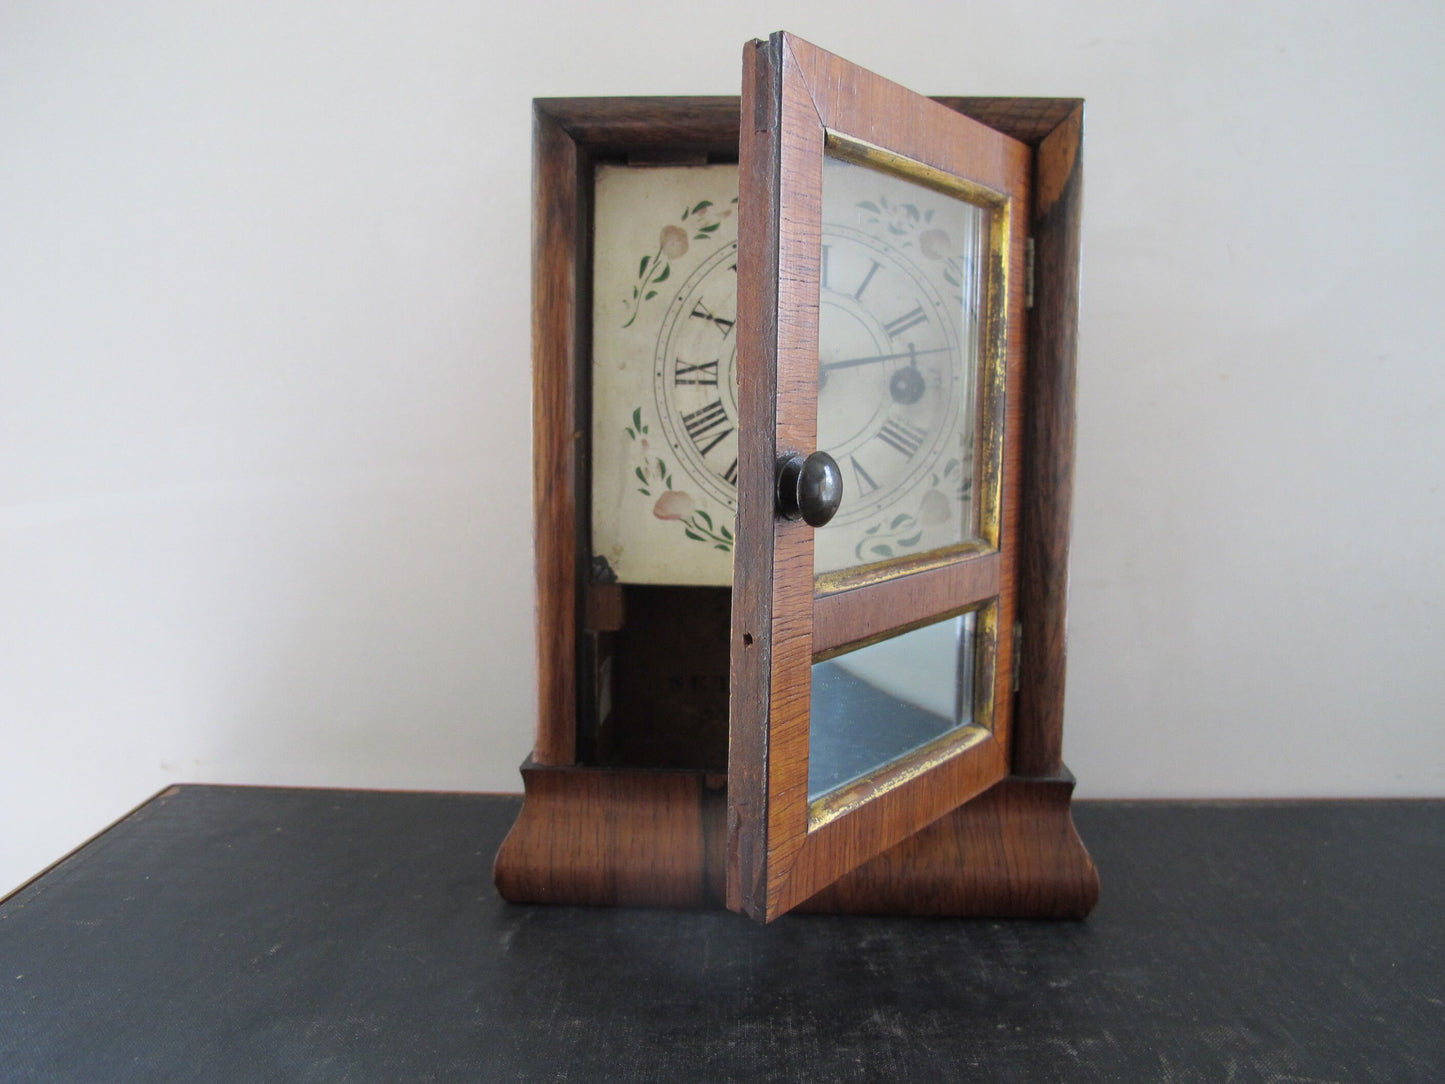 Clock Seth Thomas Miniature Mantle Clock Diminutive 1830s 1840s Rosewood Veneer Handpainted Face Museum Deaccessioned